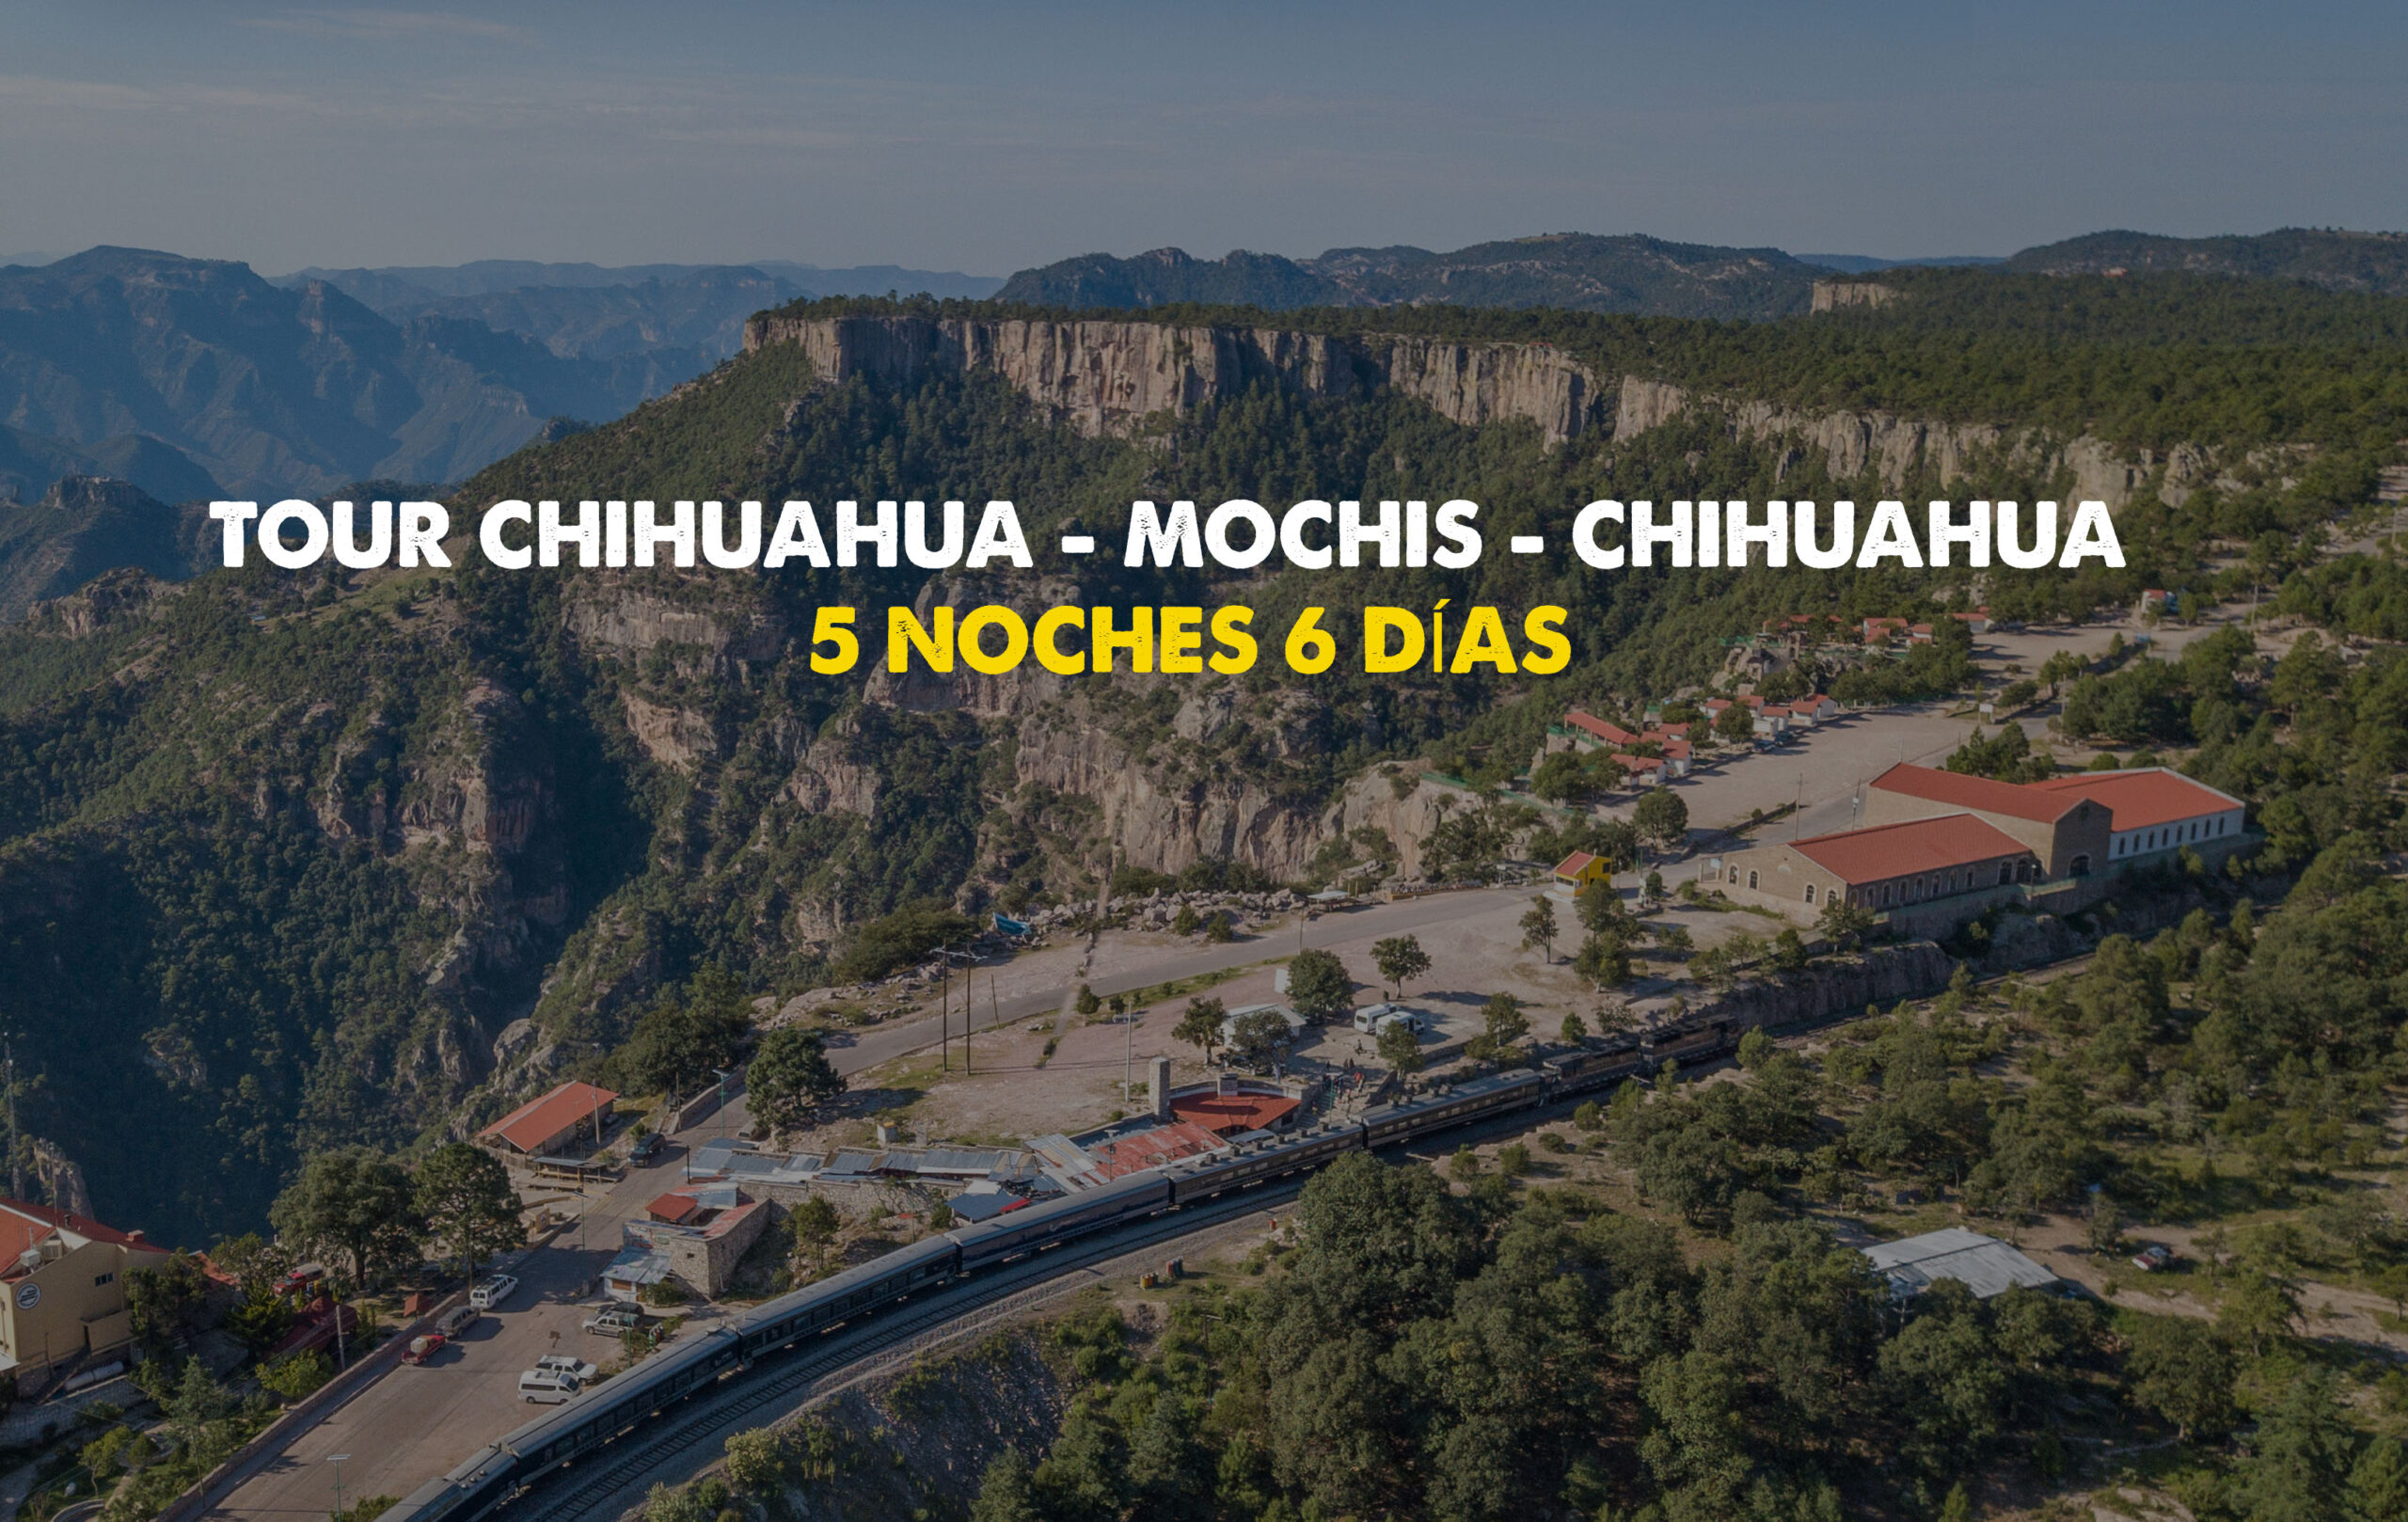 CHIHUAHUA MOCHIS CHIHUAHUA 5 NOCHES 6 DÍAS Tours en